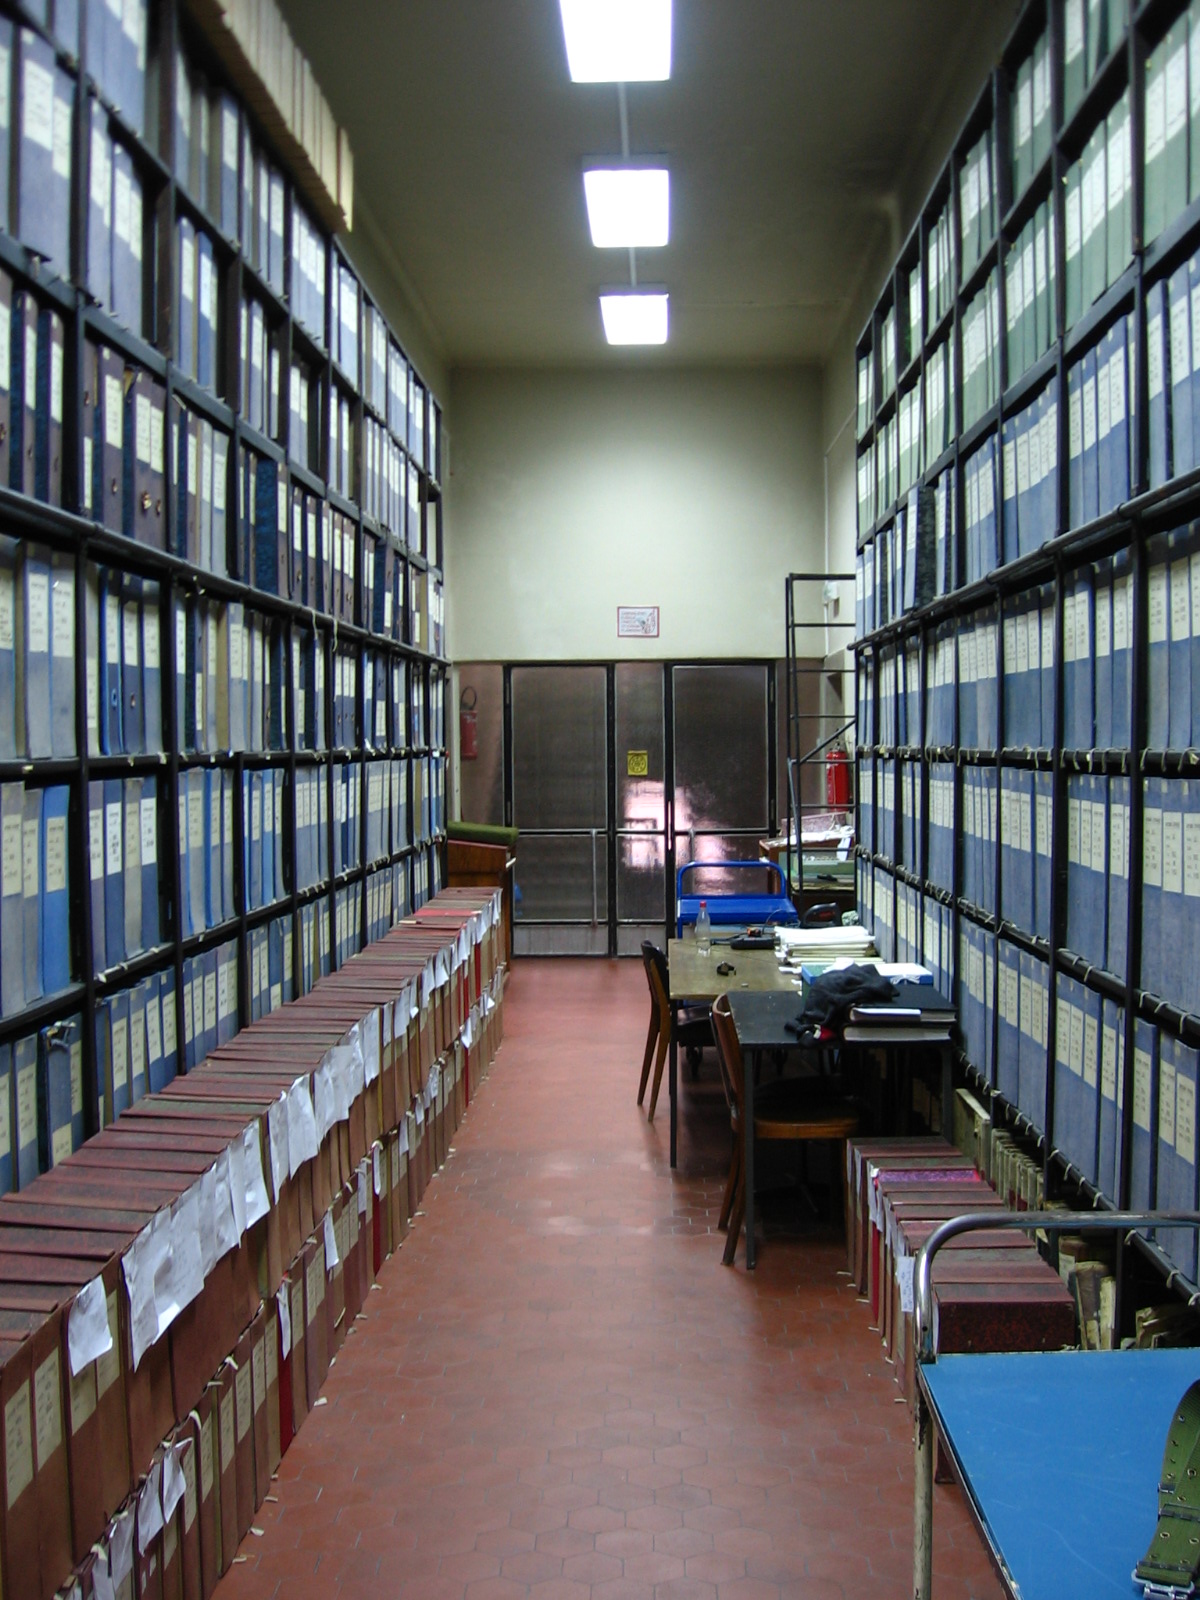 Archive of Serbia - Wikipedia